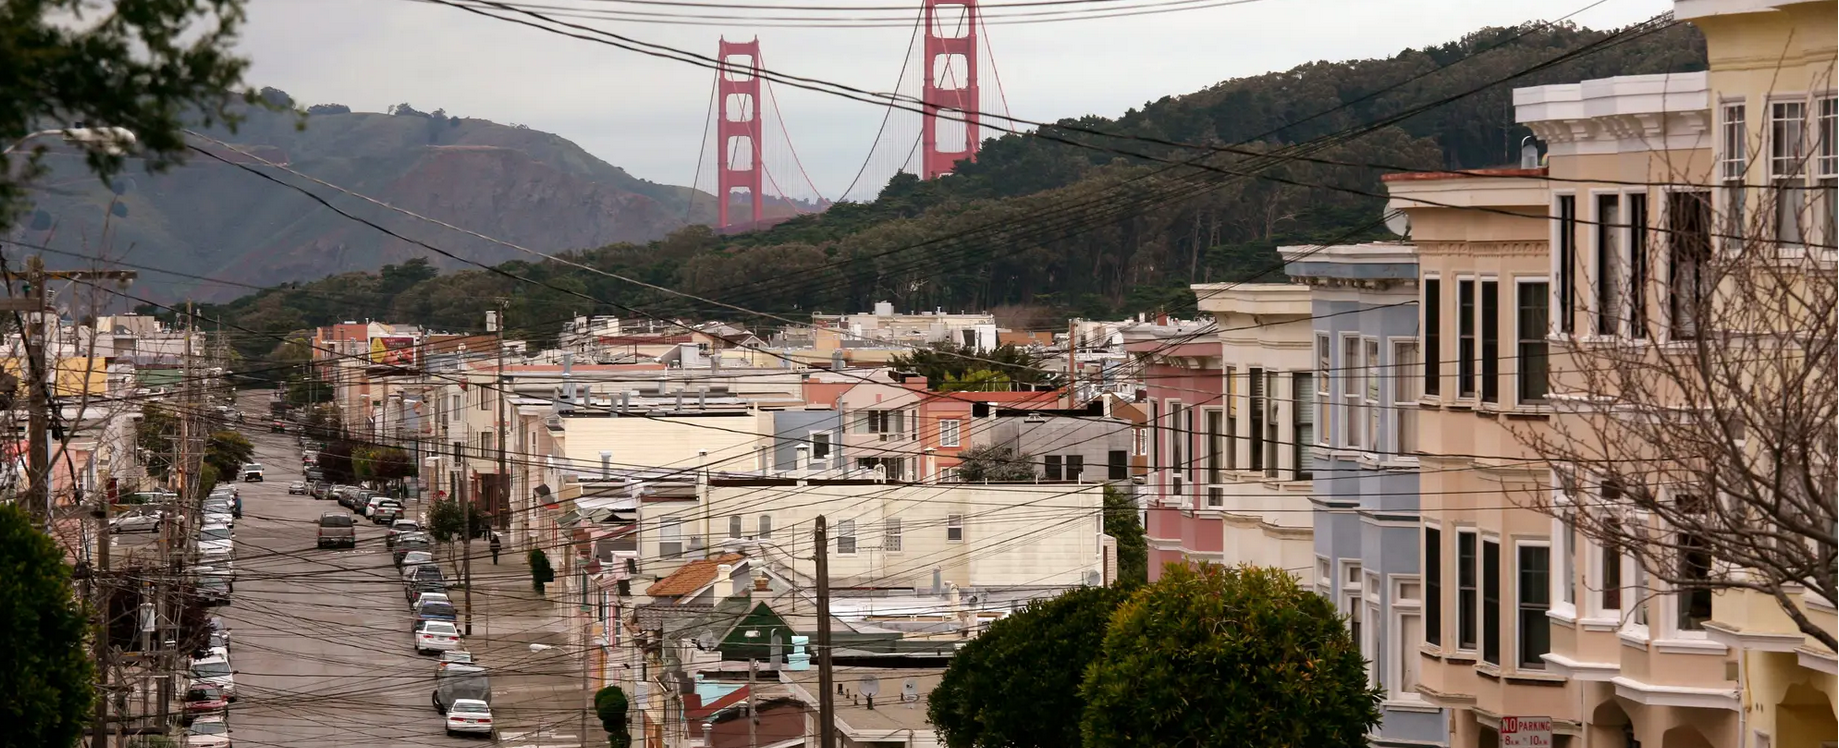 San Francisco Neighborhood with Powerlines and Golden Gate Bridge in Background